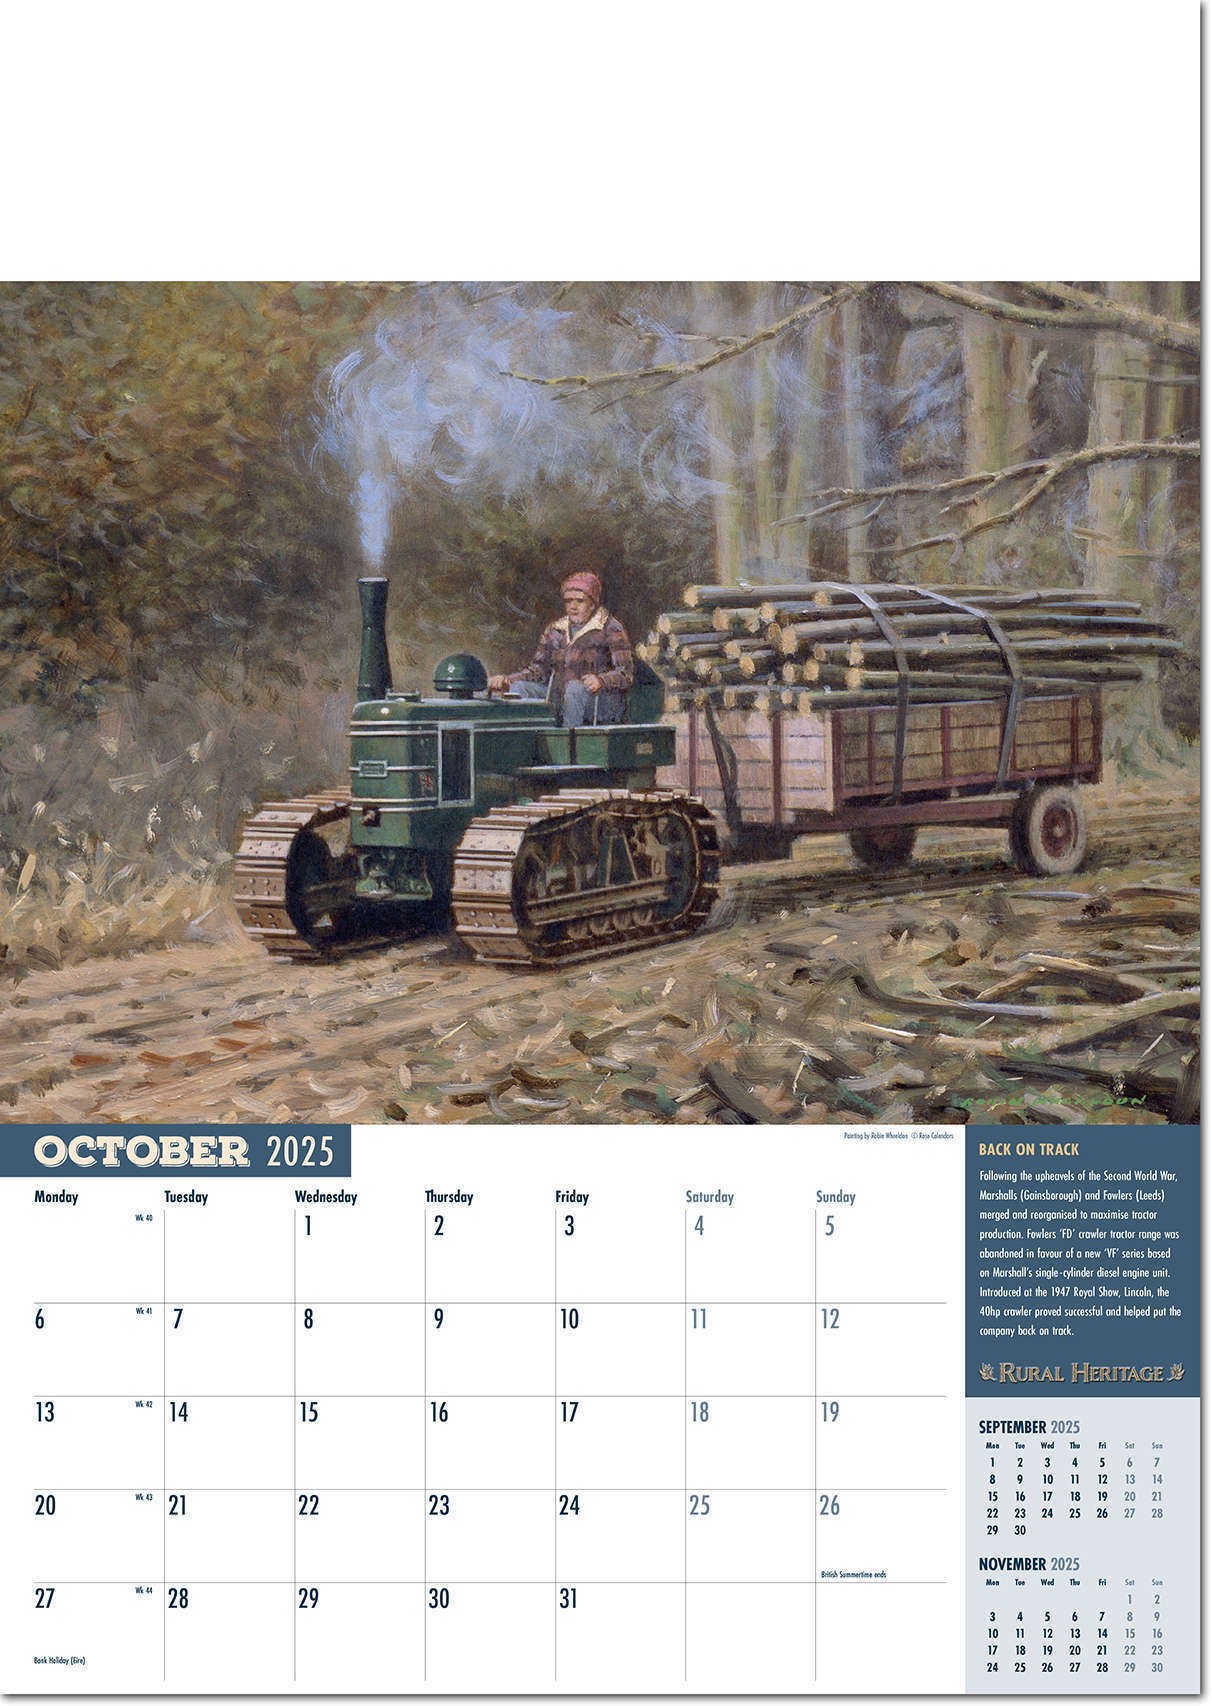 Rural Heritage Calendar